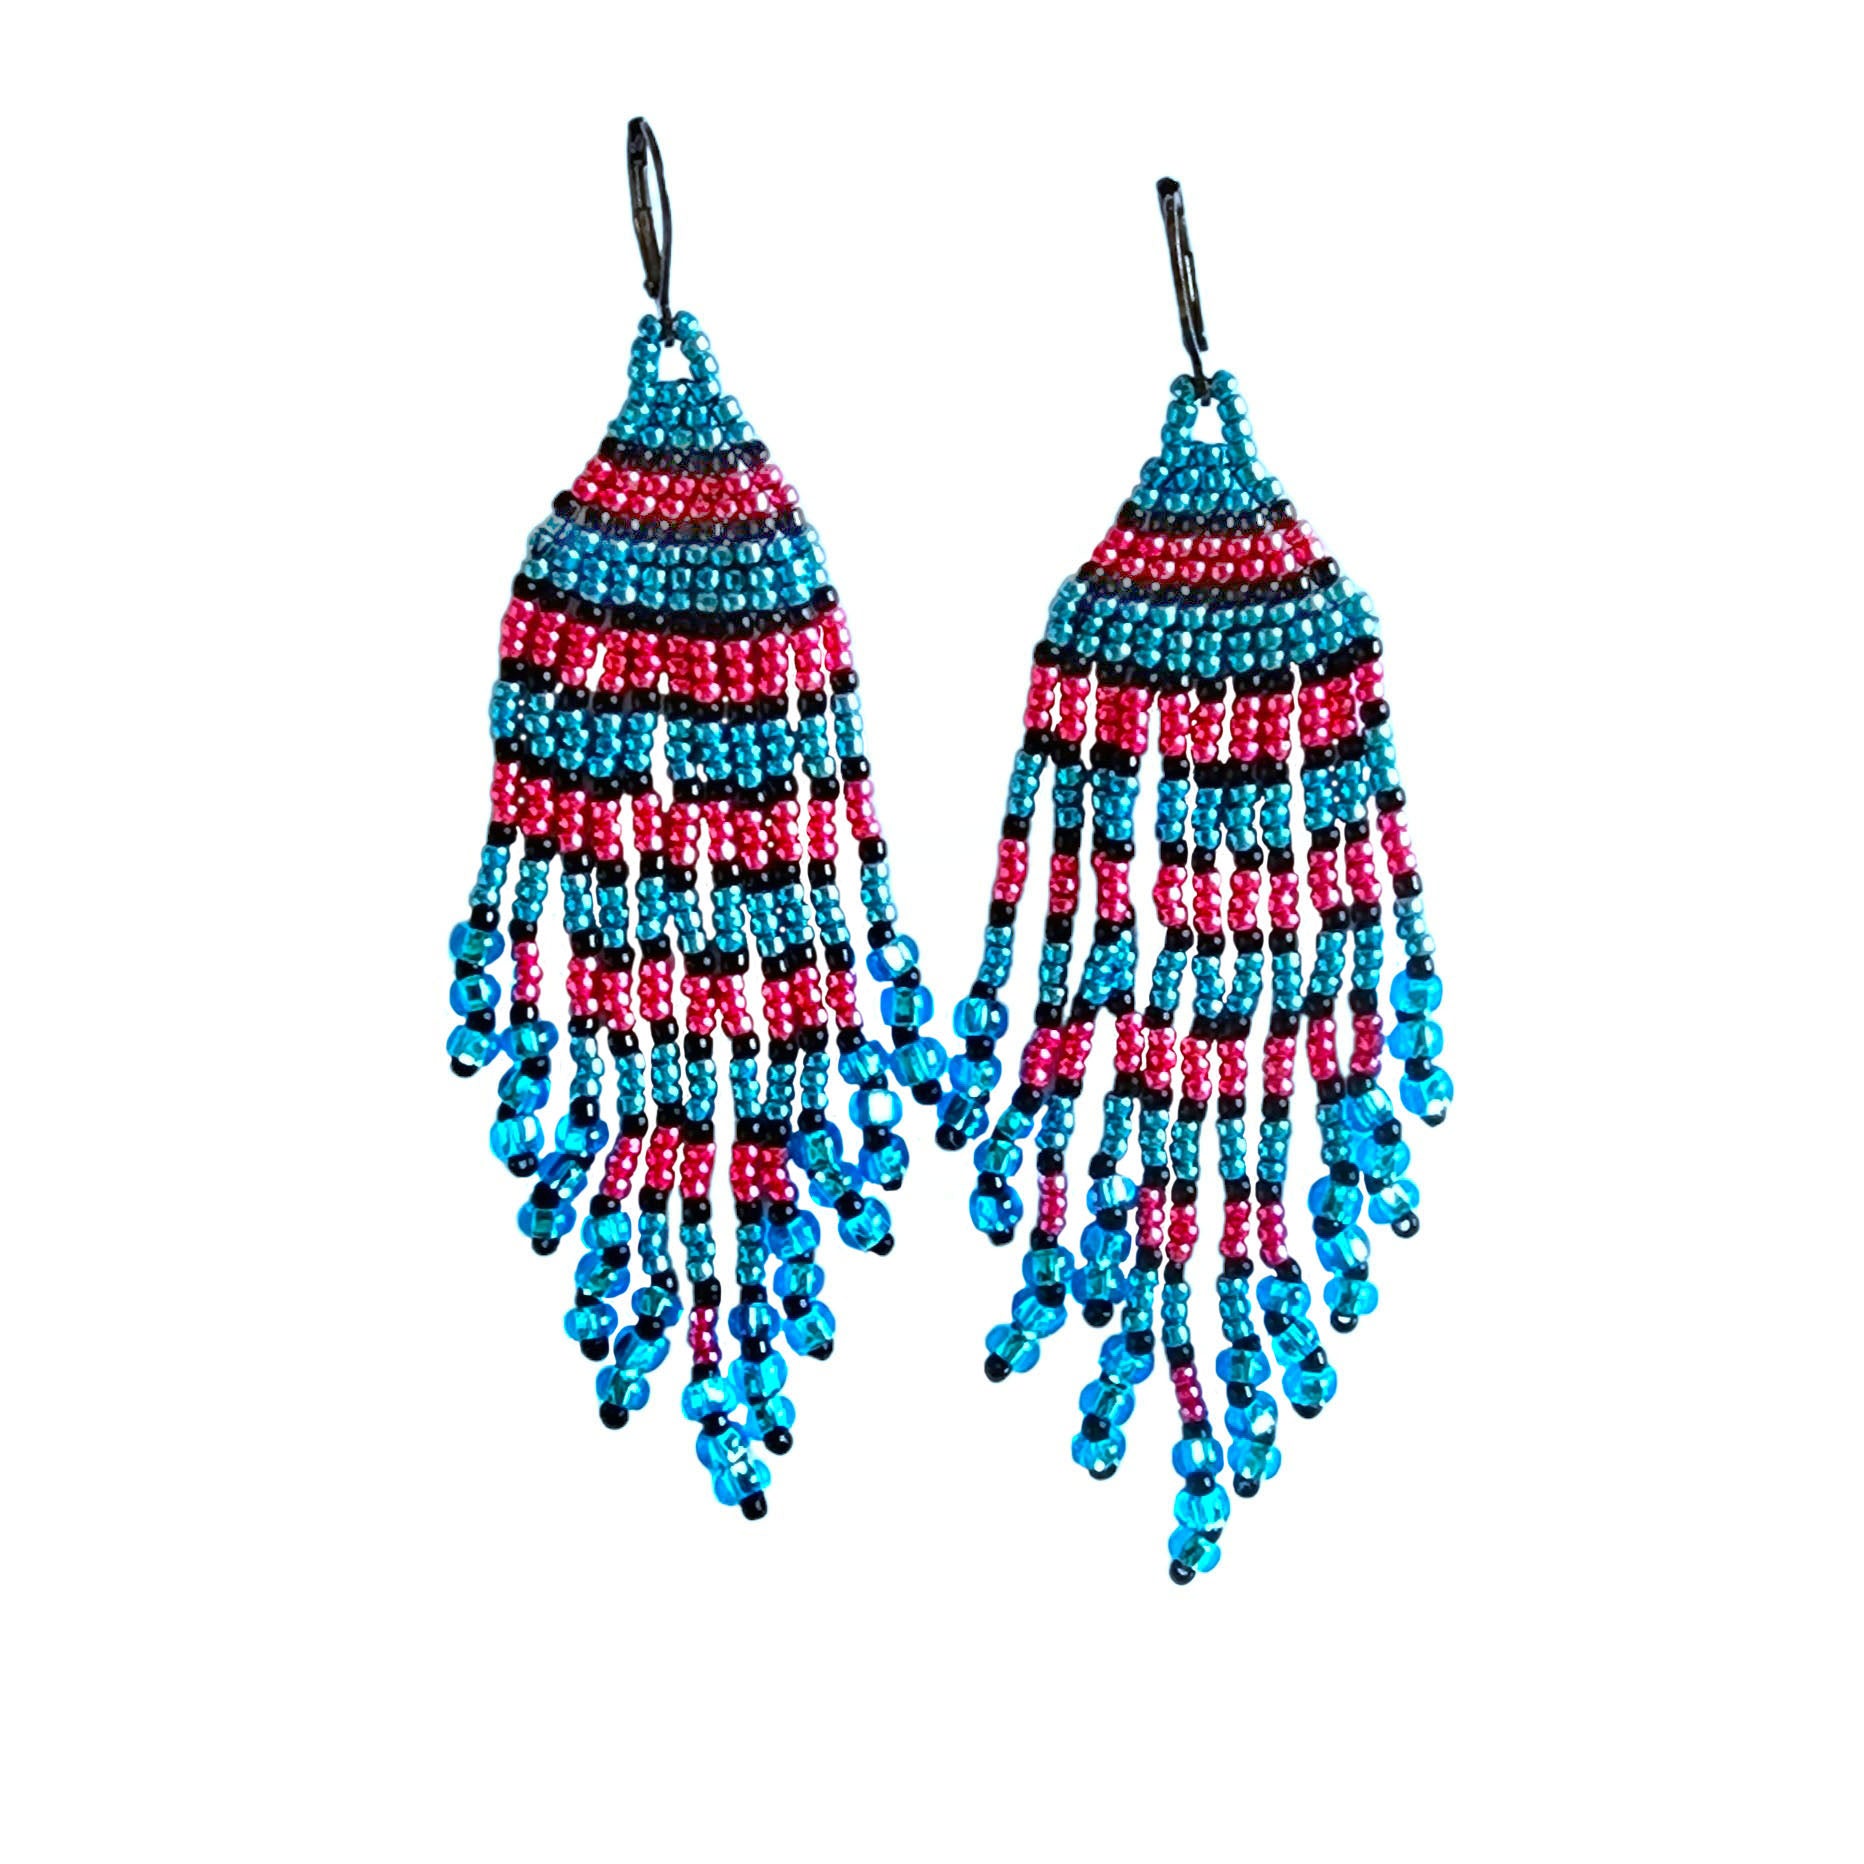 Long Fringe Earrings, Beaded with Fuchsia Pink, Aqua Blue and black seed beads. The extra-long earrings dangle from Gun metal earring hooks. 